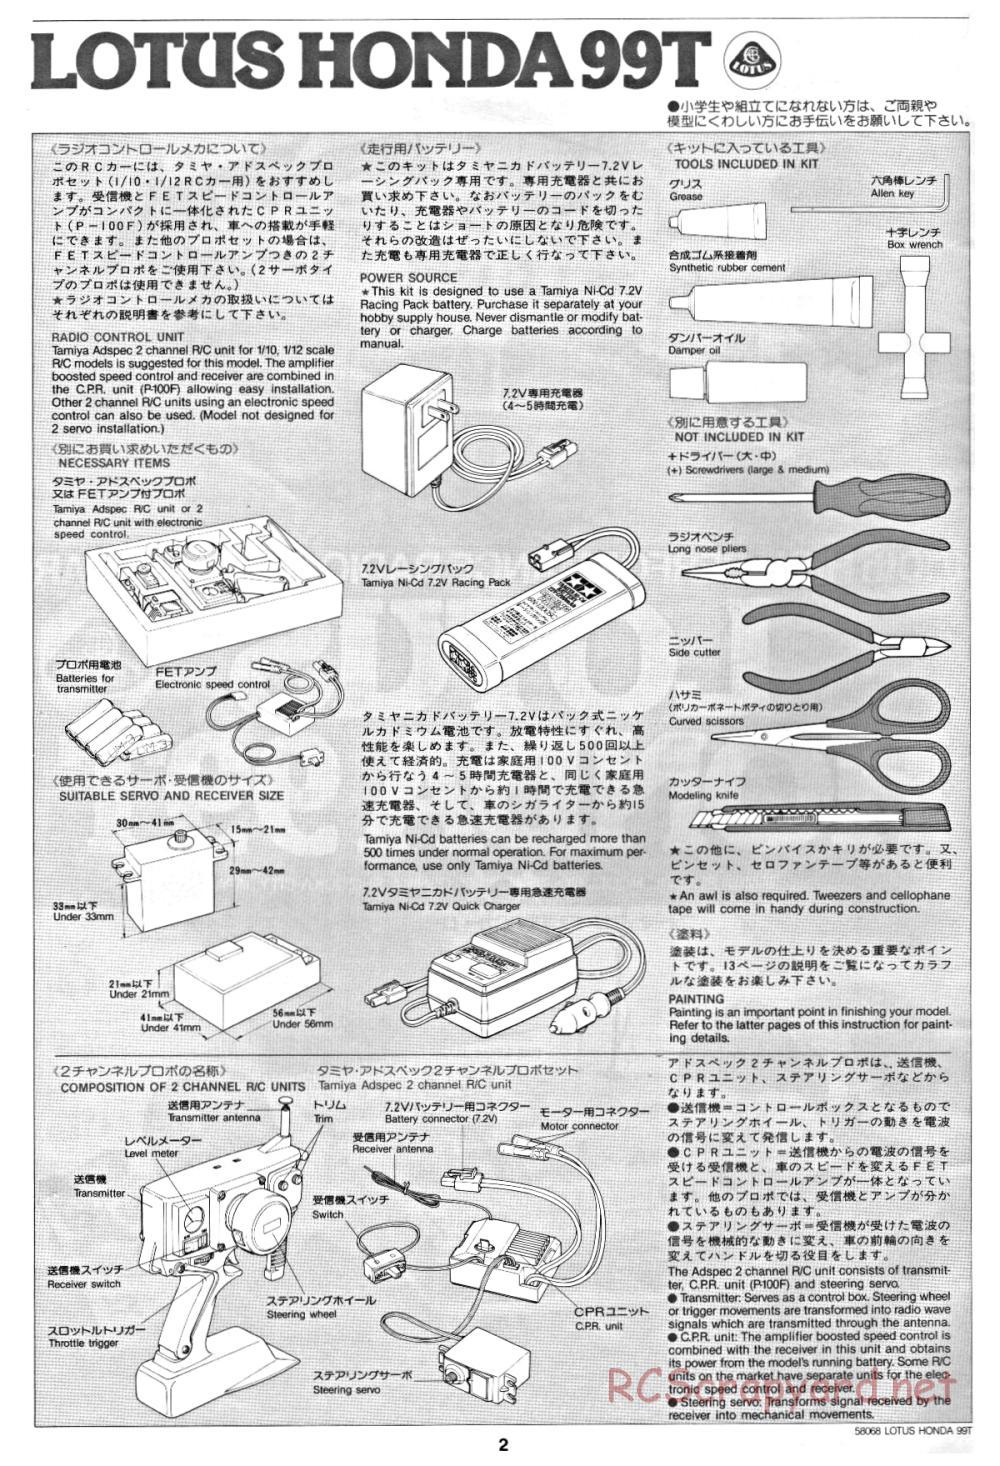 Tamiya - Lotus Honda 99T - 58068 - Manual - Page 2